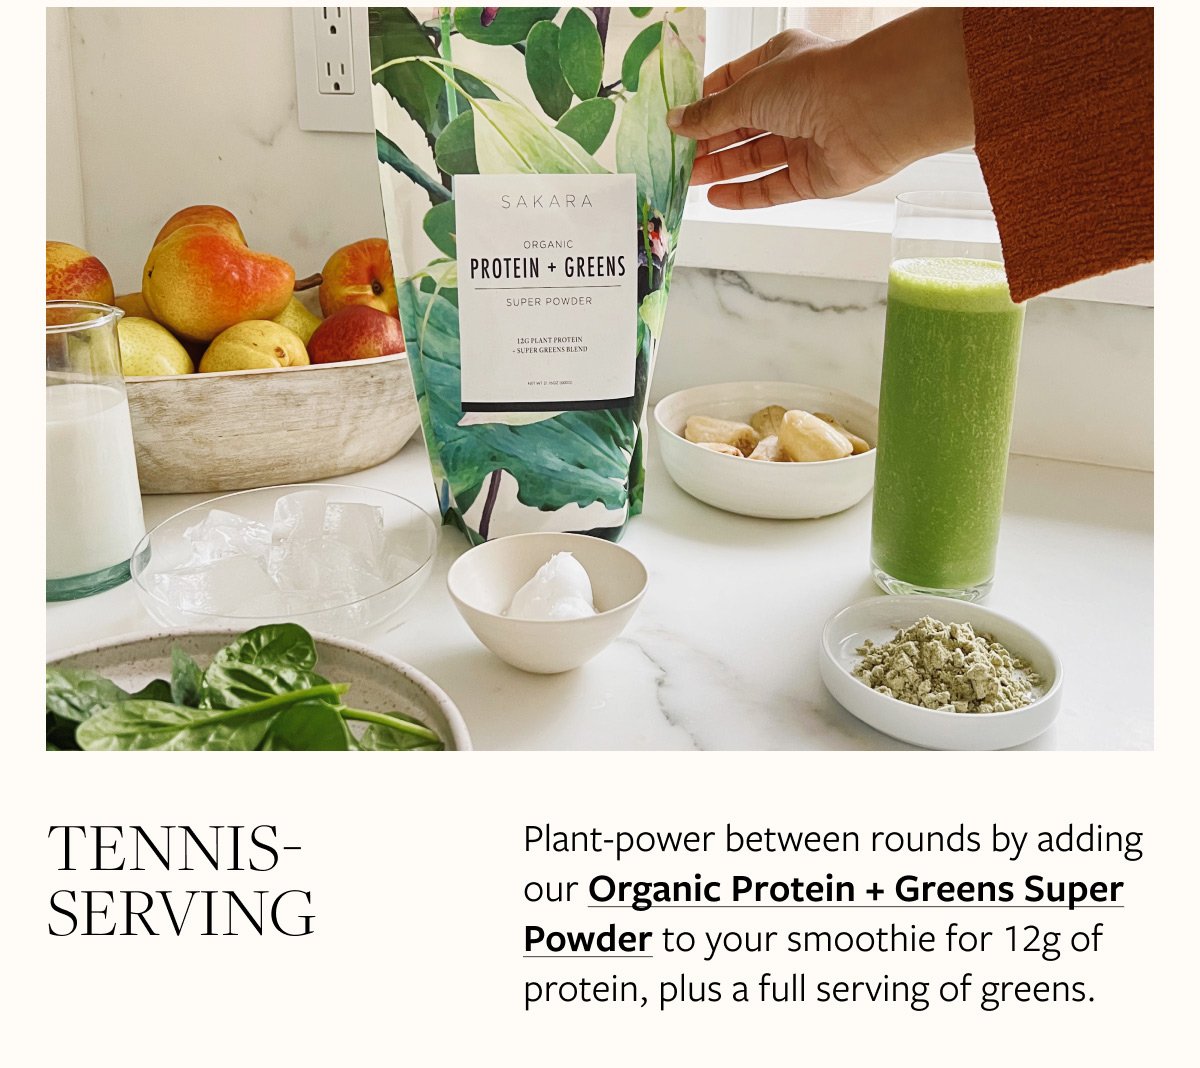 Tennis-Serving—Organic Protein + Greens Super Powder